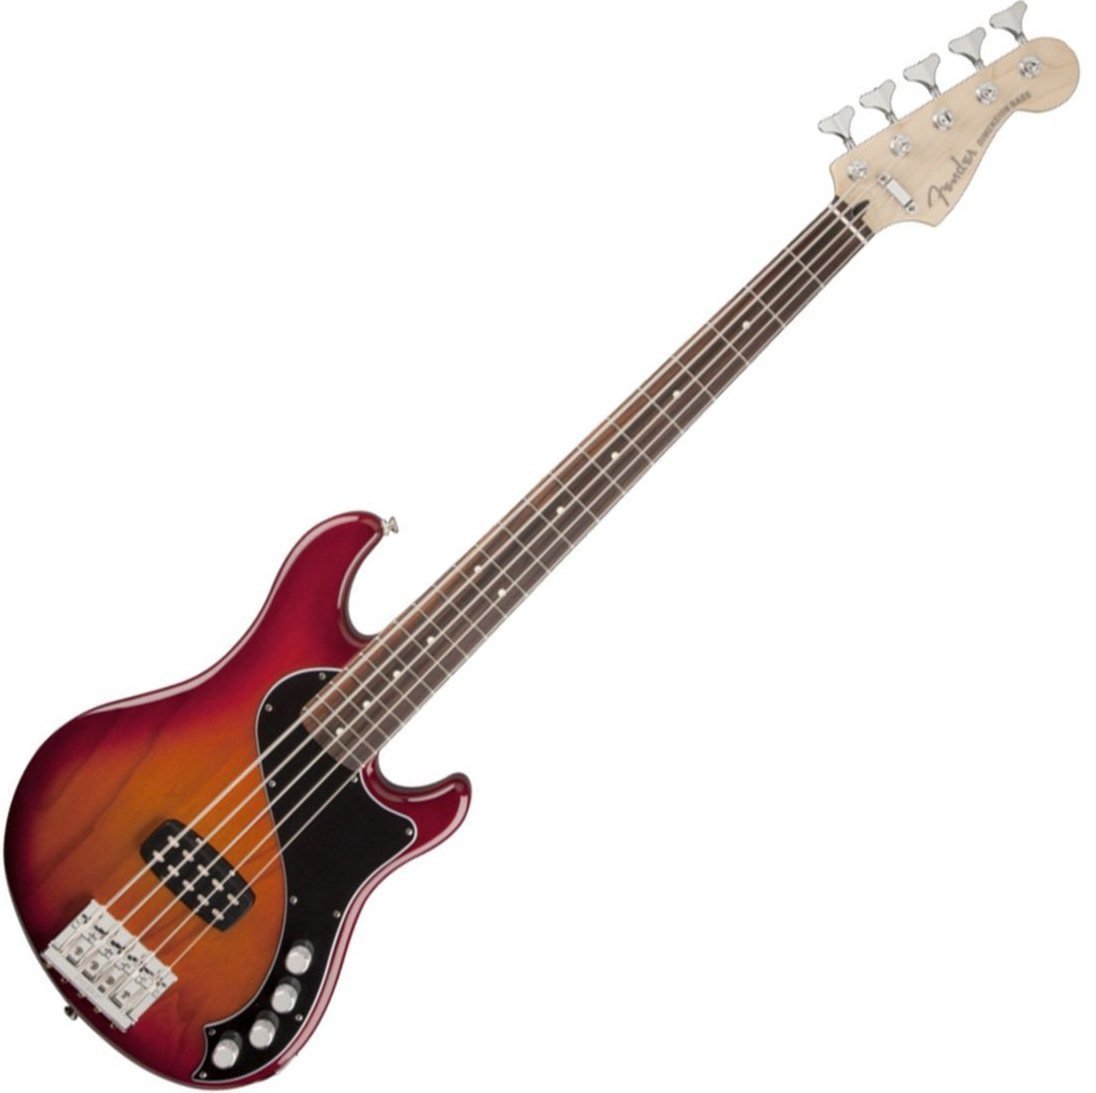 Baixo de 5 cordas Fender Deluxe Dimension Bass V 5 string Aged Cherry Burst